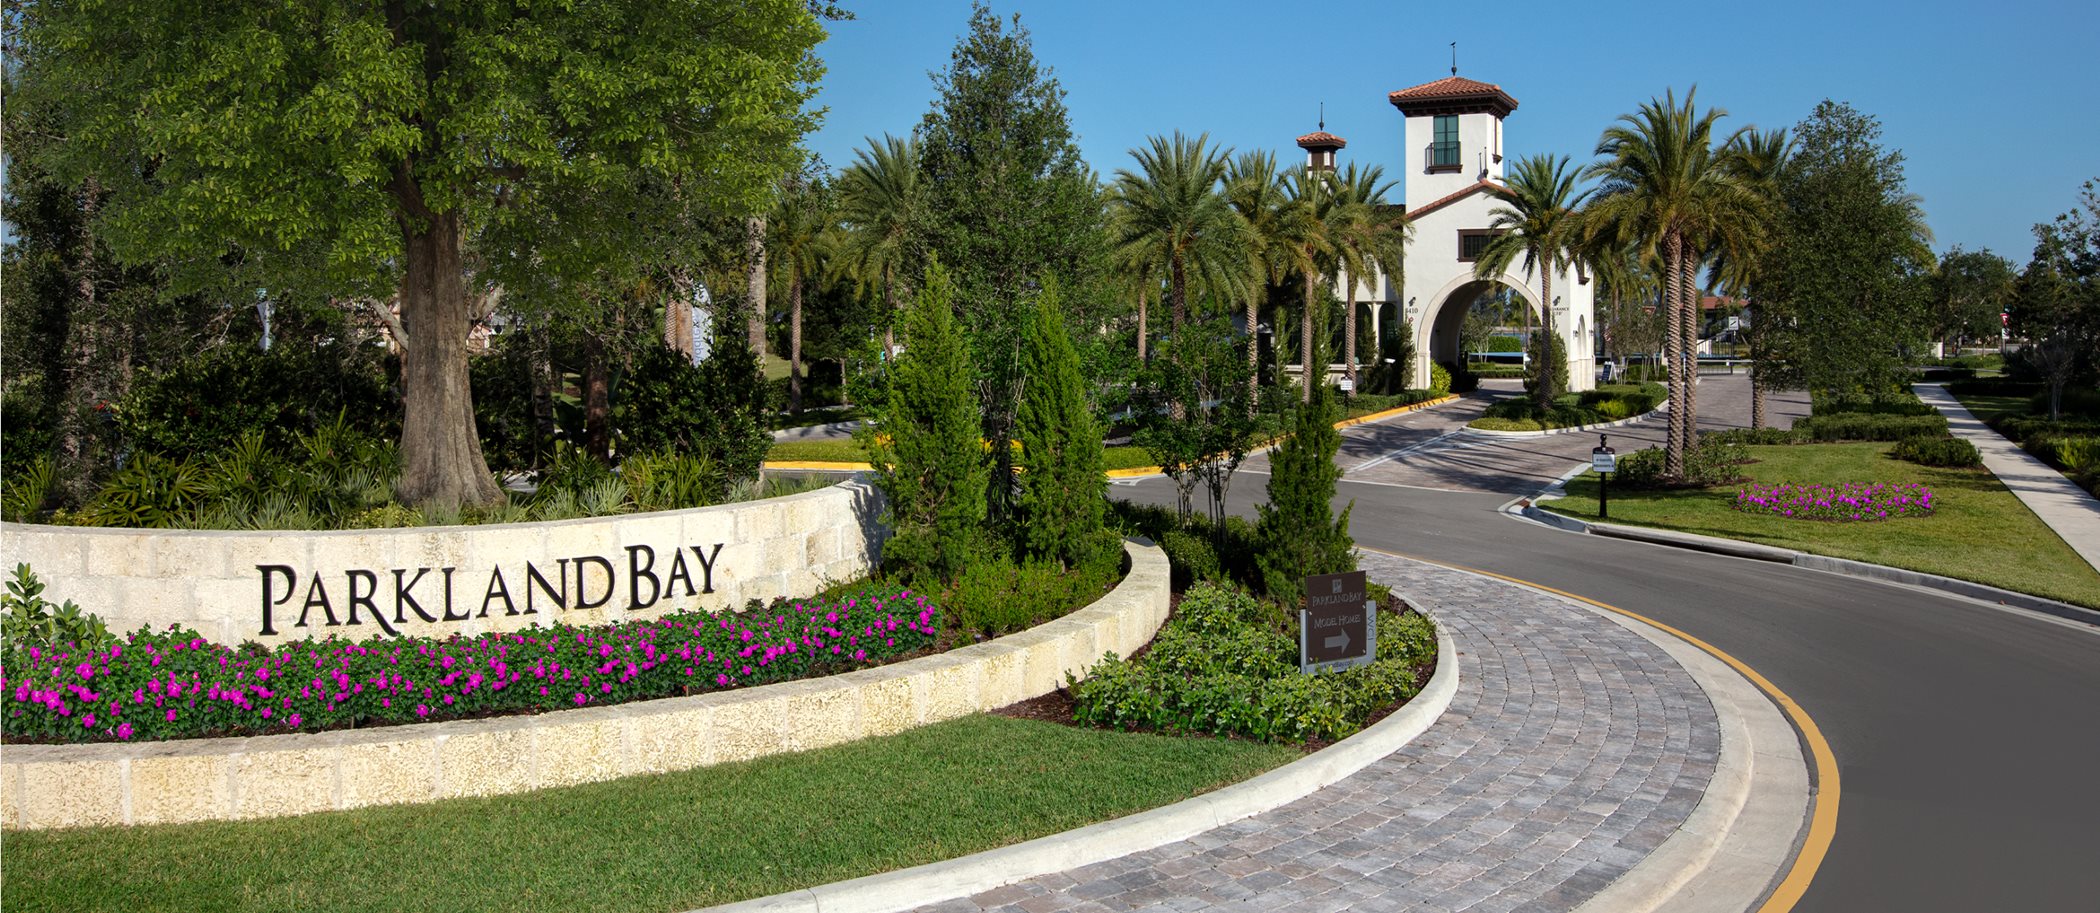 Parkland Bay community entrance